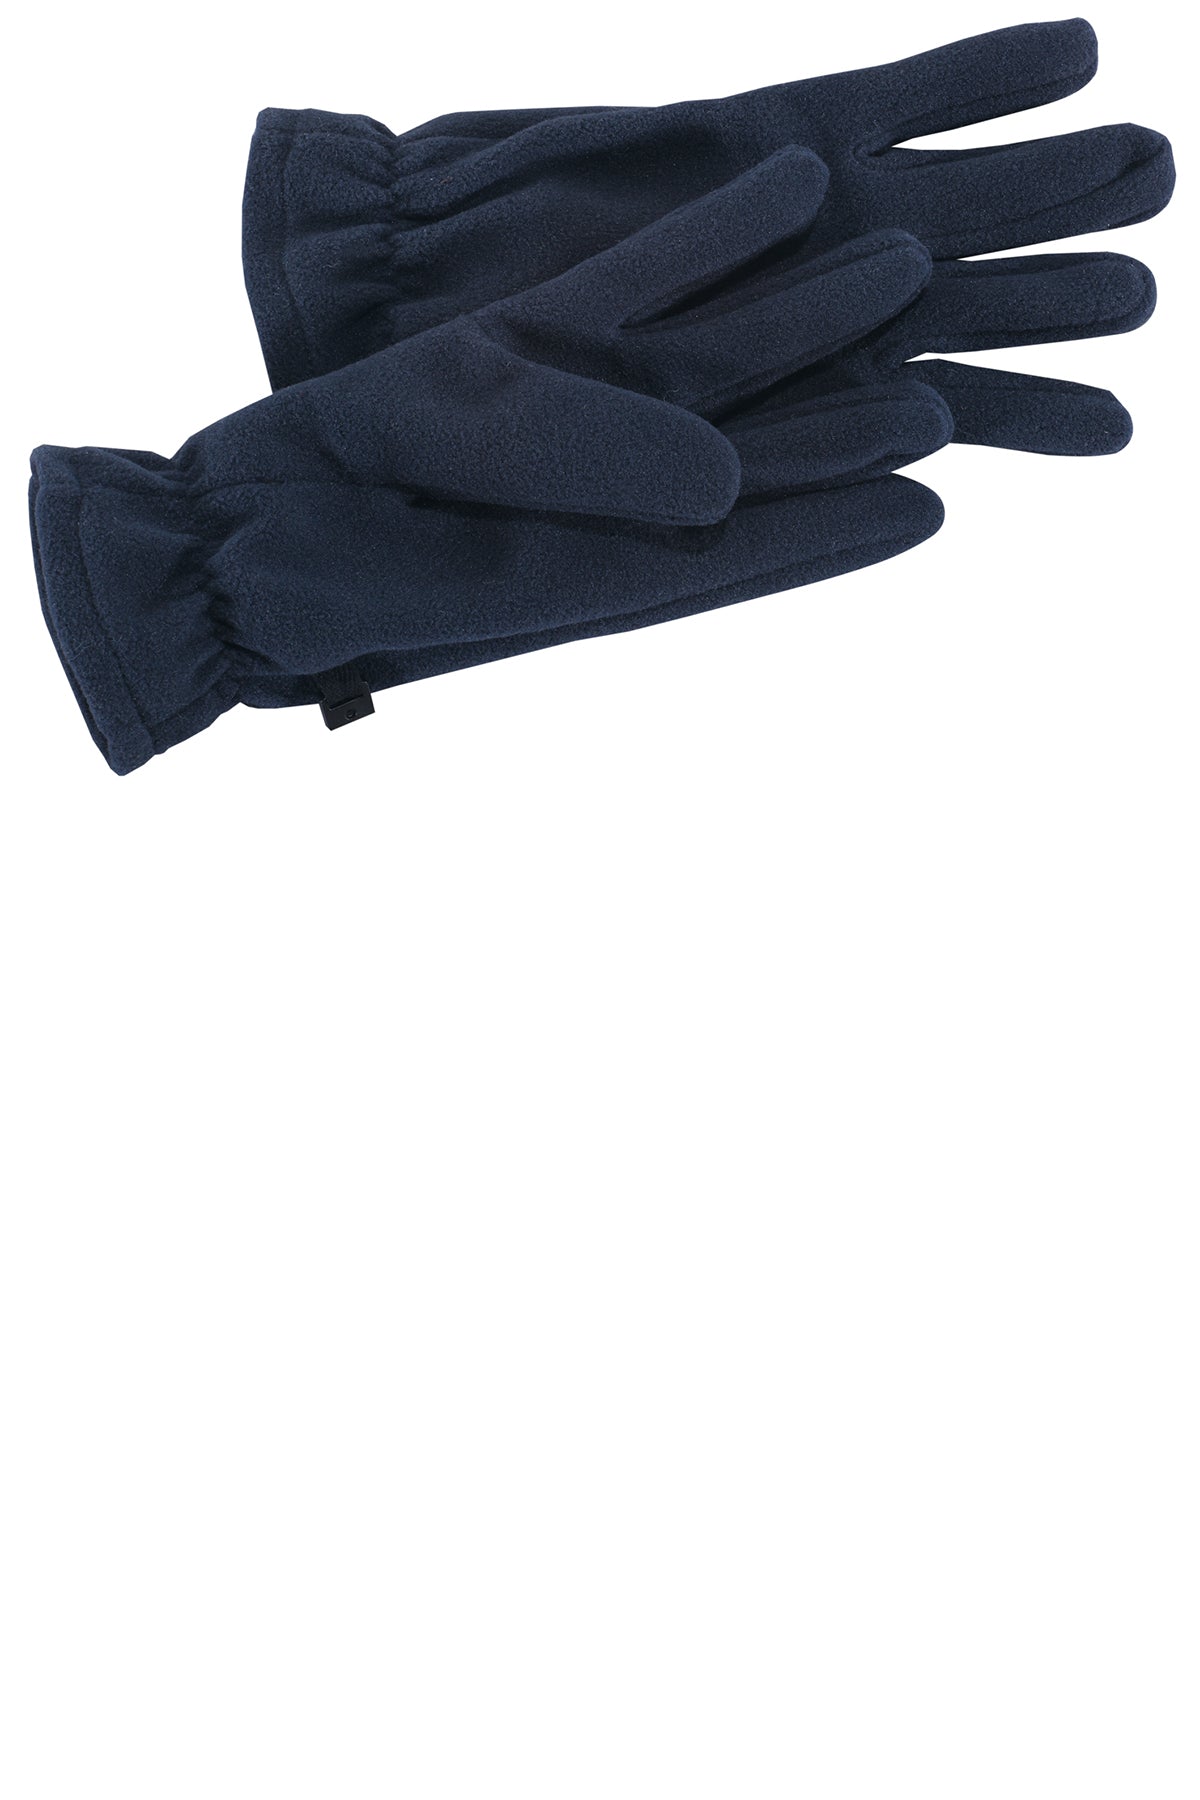 port authority fleece gloves gl01 navy